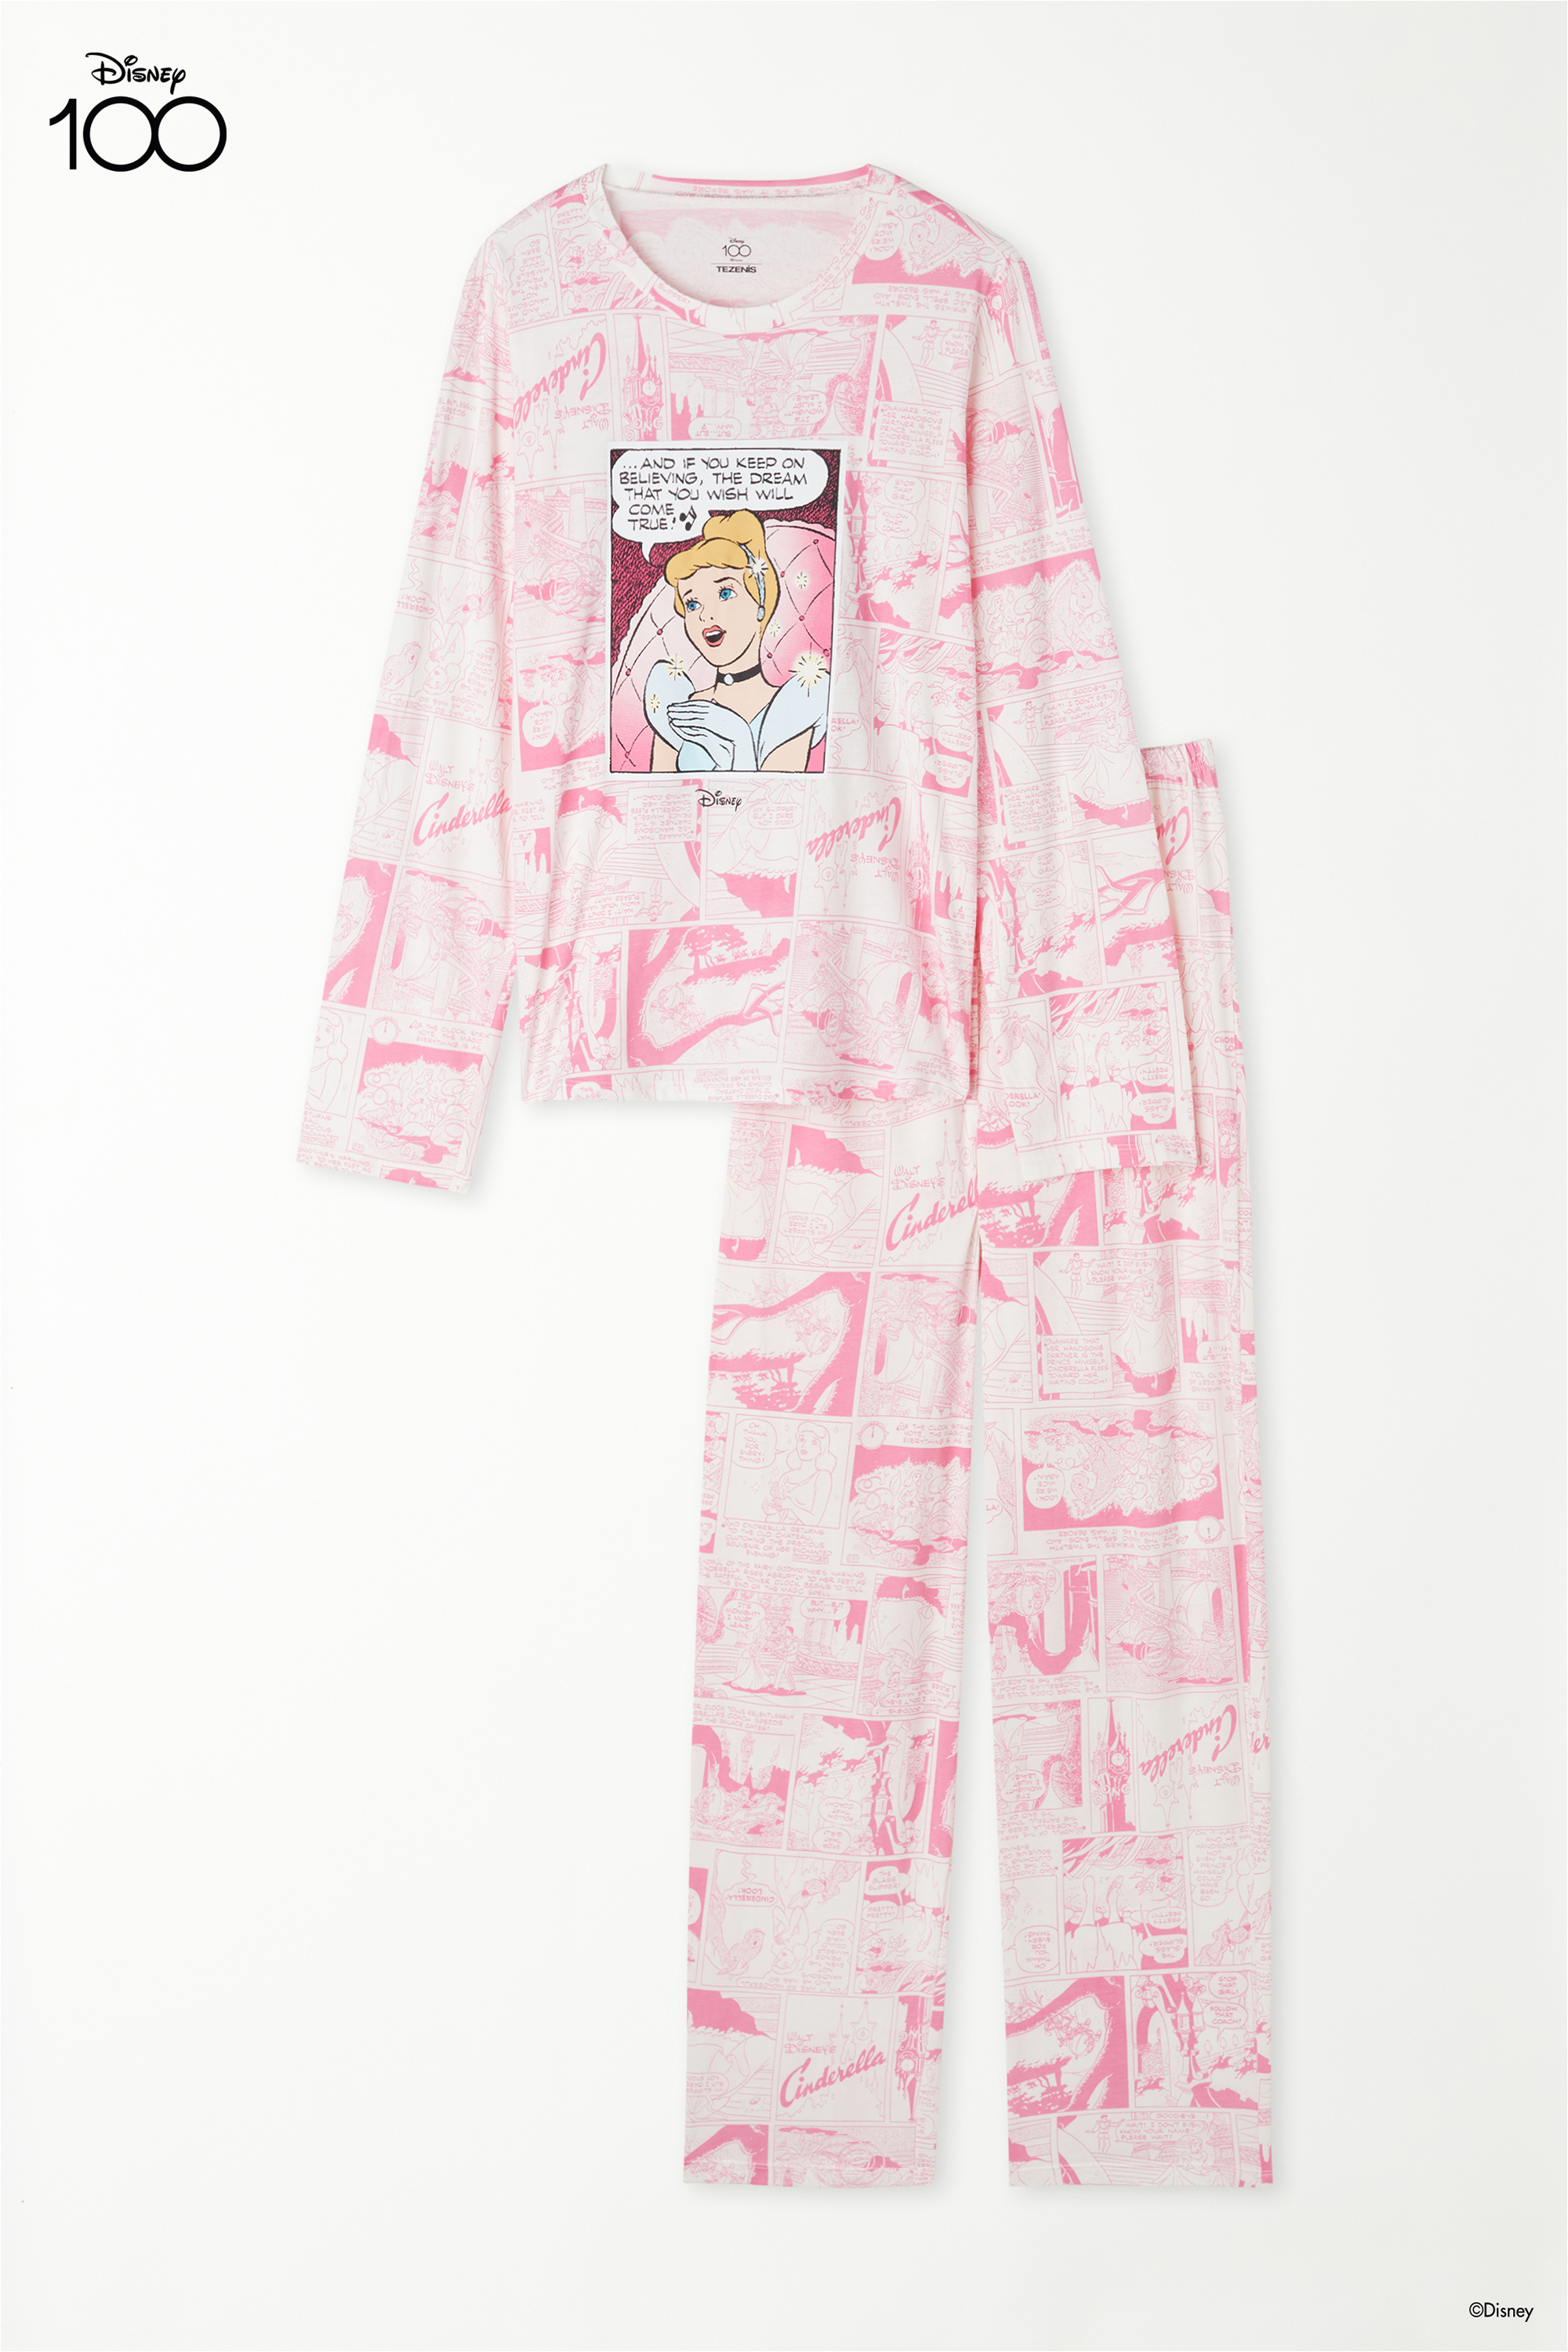 Long Cotton Pyjamas with Disney 100 Print